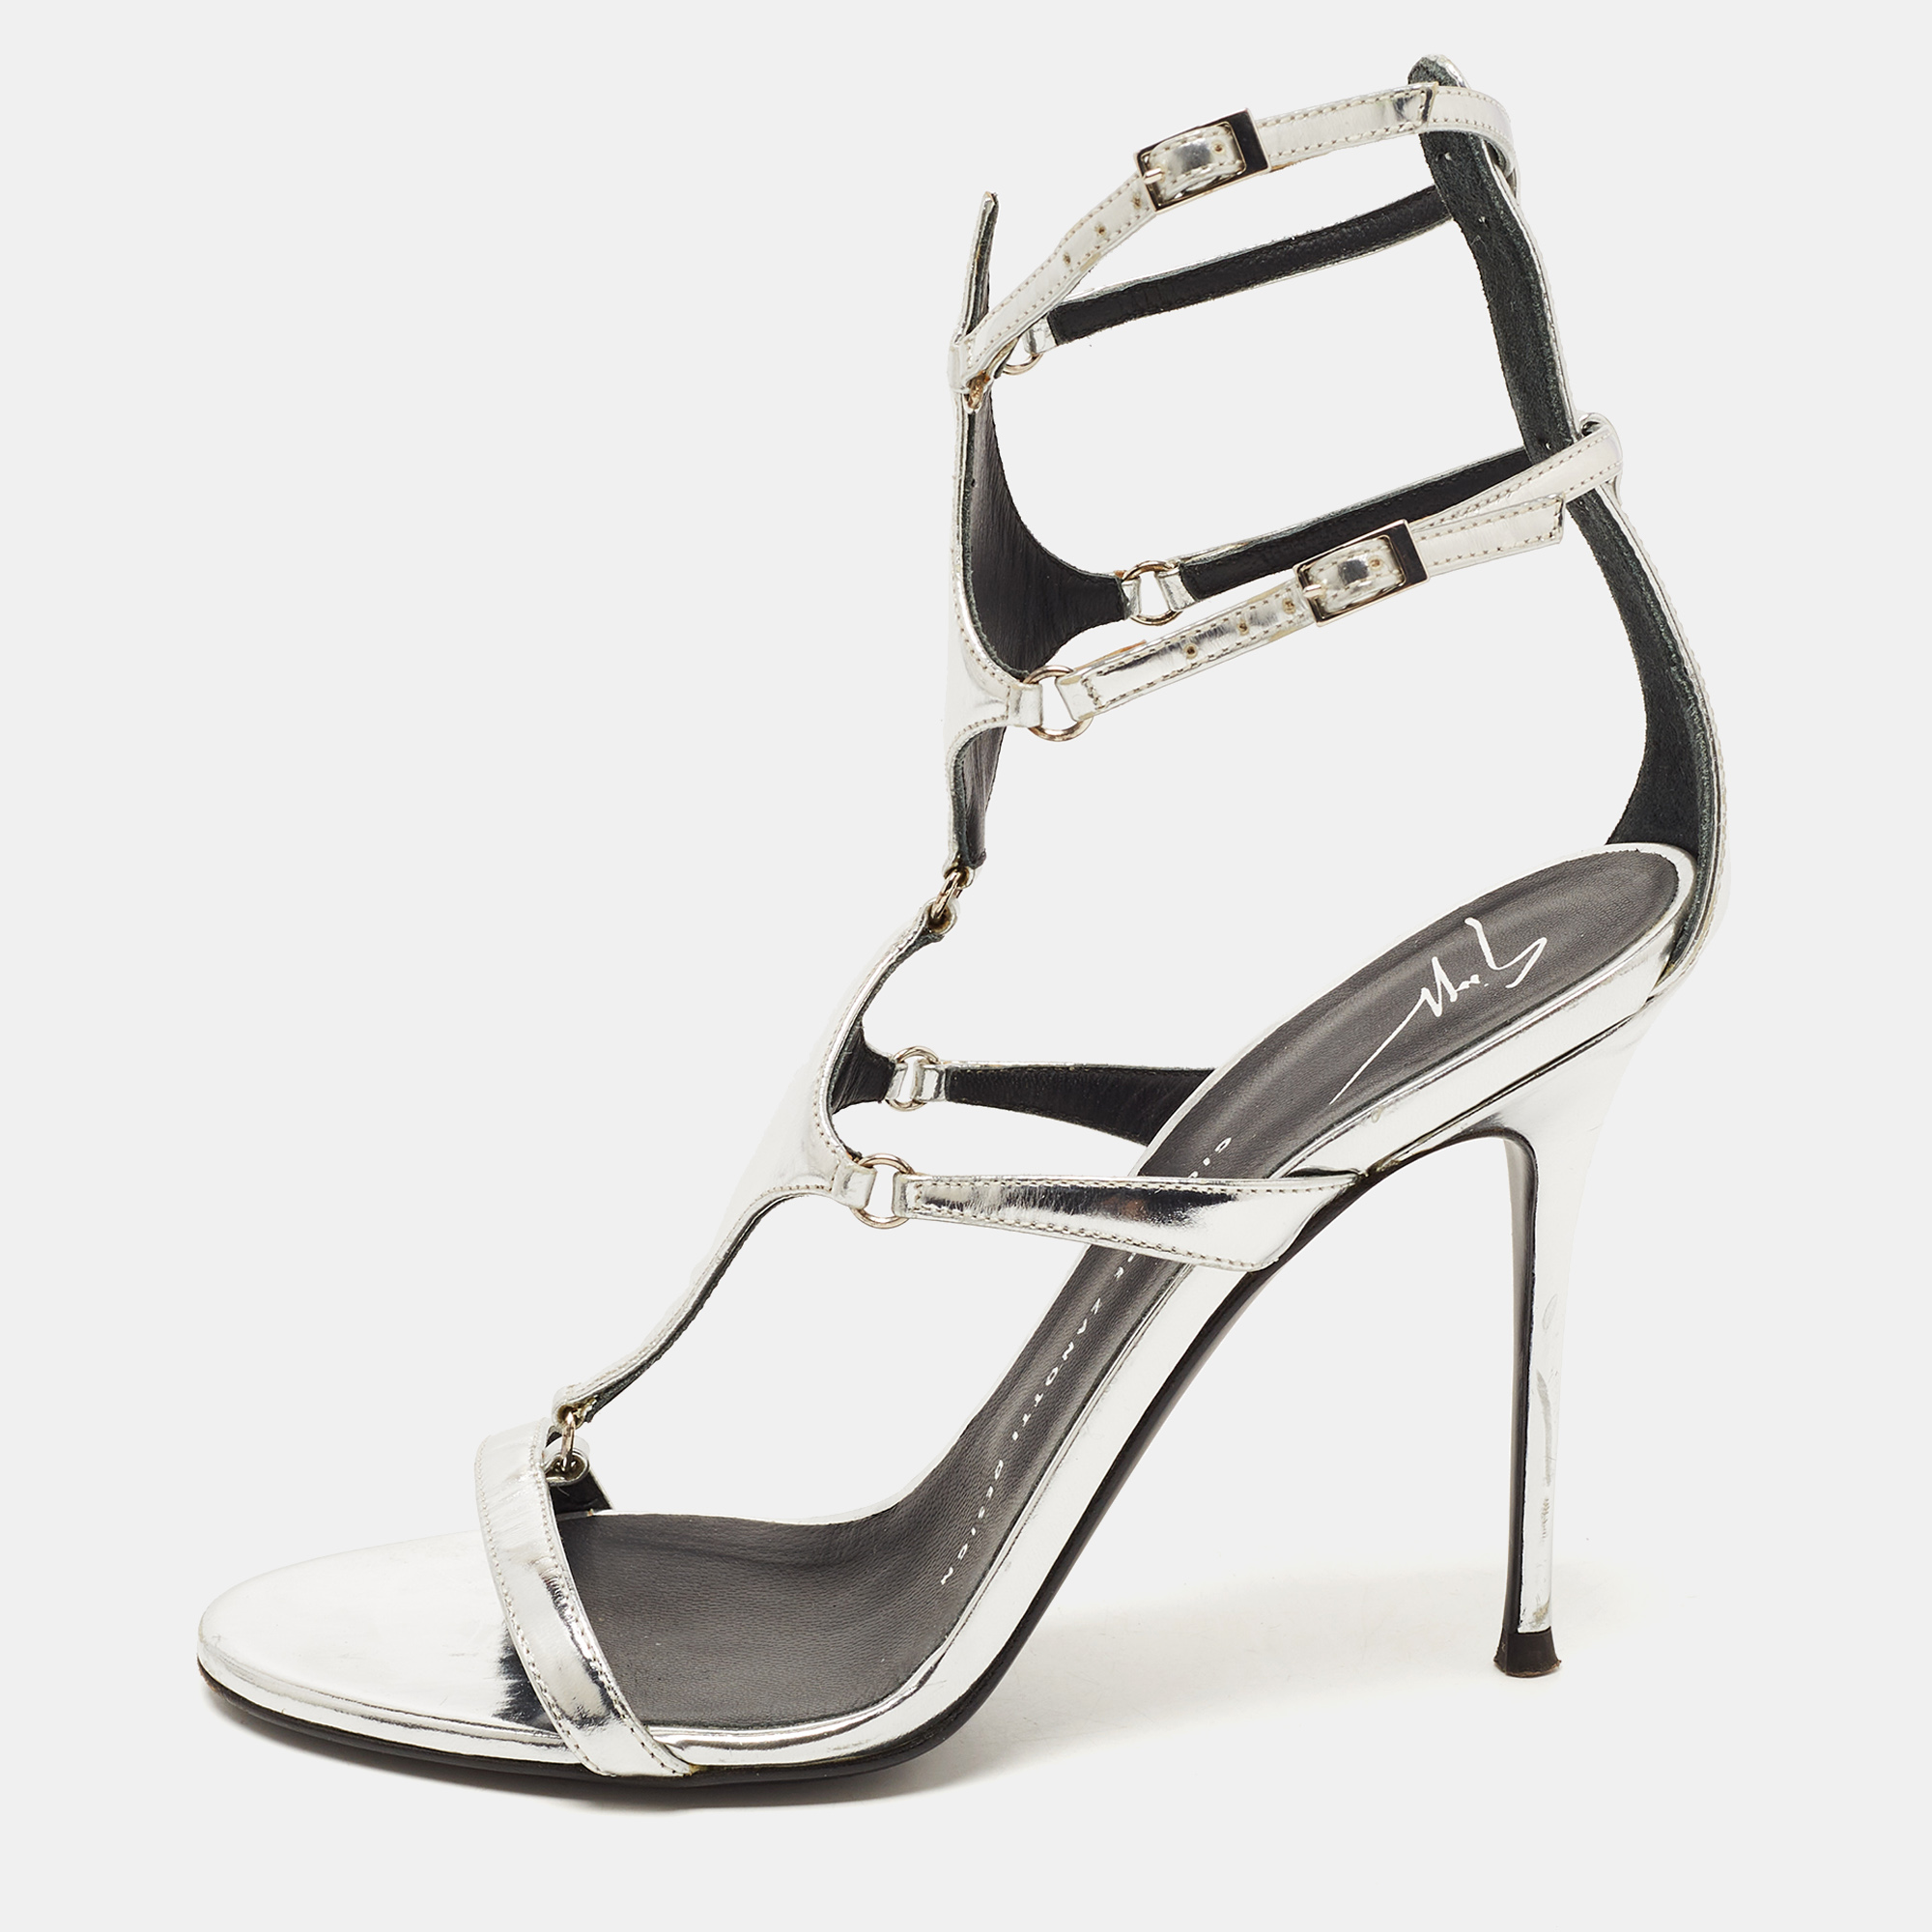 Giuseppe Zanotti Metallic Silver Leather Strappy Sandals Size 37.5